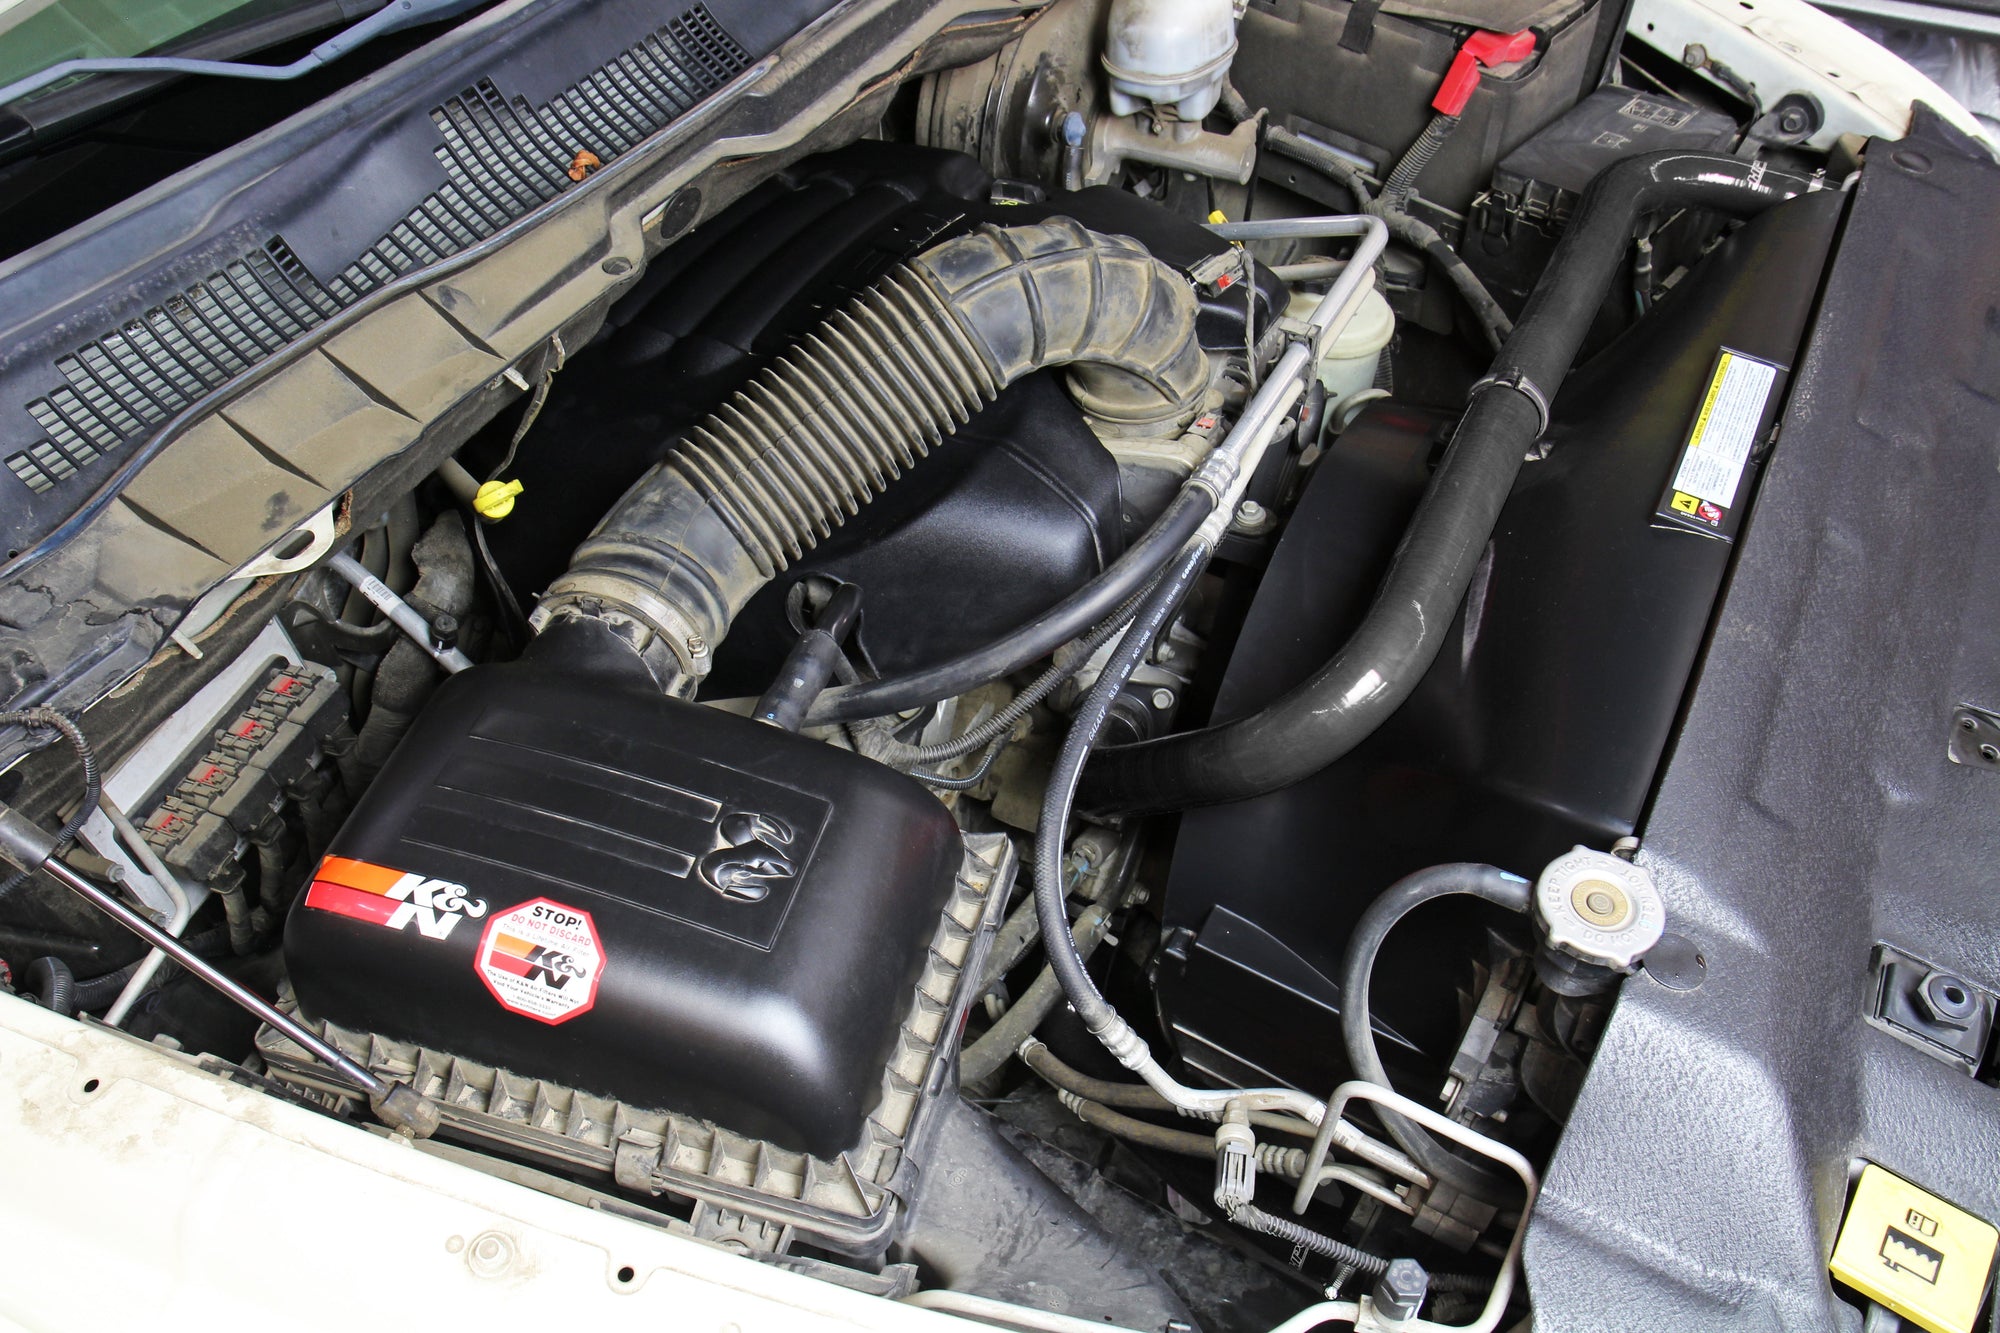 HPS Black Silicone Radiator Hose Kit replace Dodge 2013-2018 Ram 2500 Pickup 5.7L V8 OEM upper and lower coolant hoses 571818-BLK